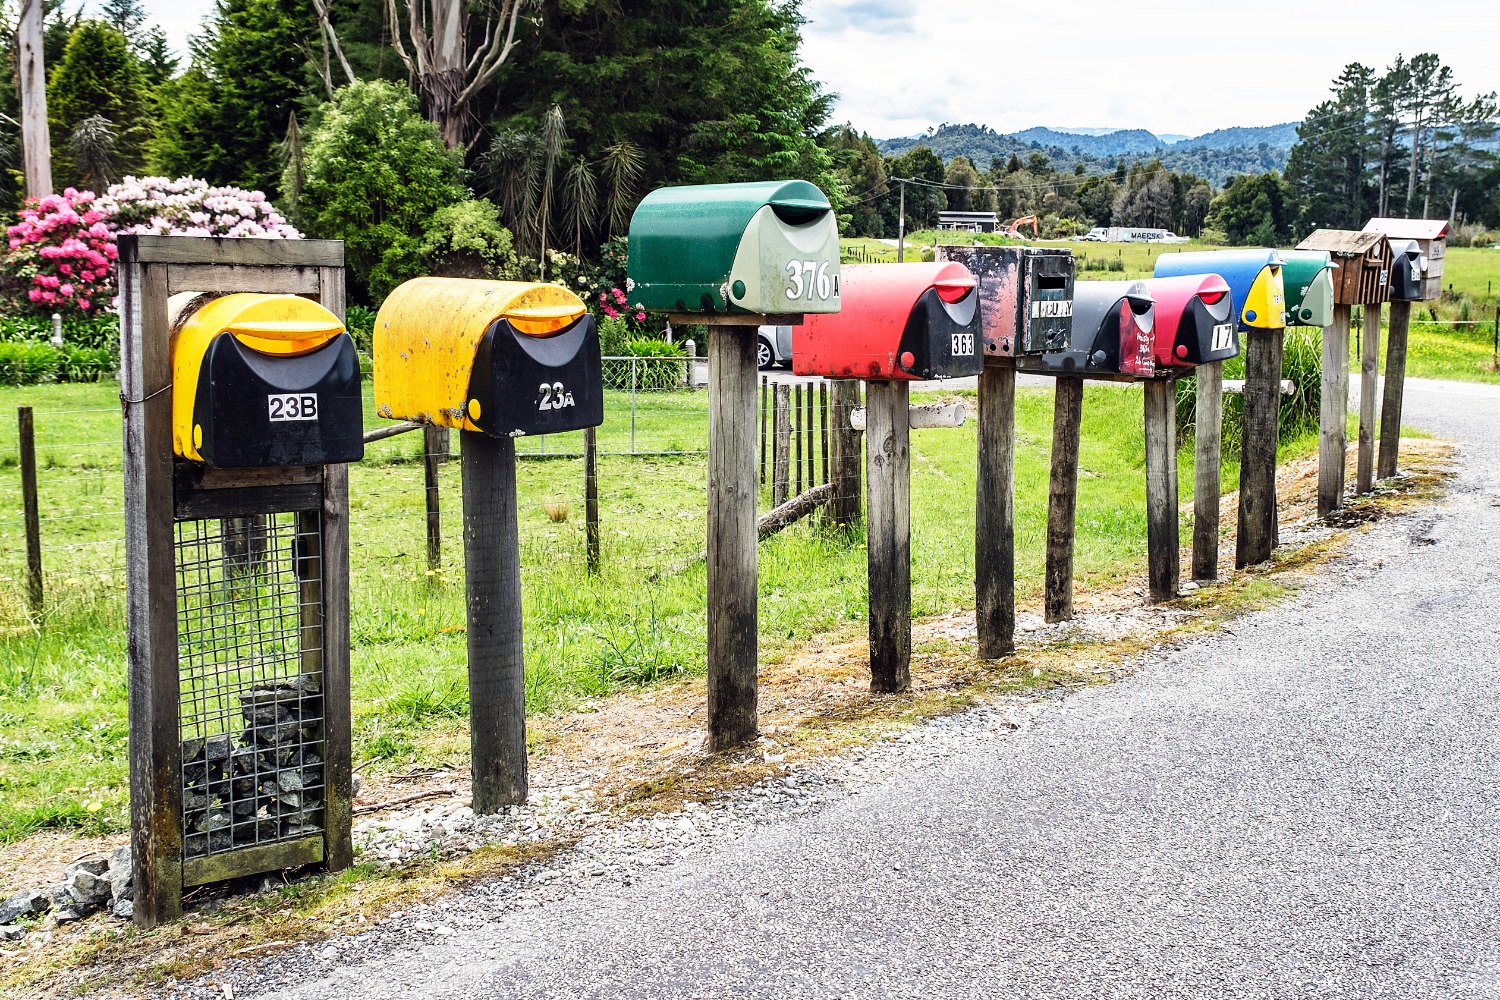 Between Hokitika and Greymouth, mailboxes